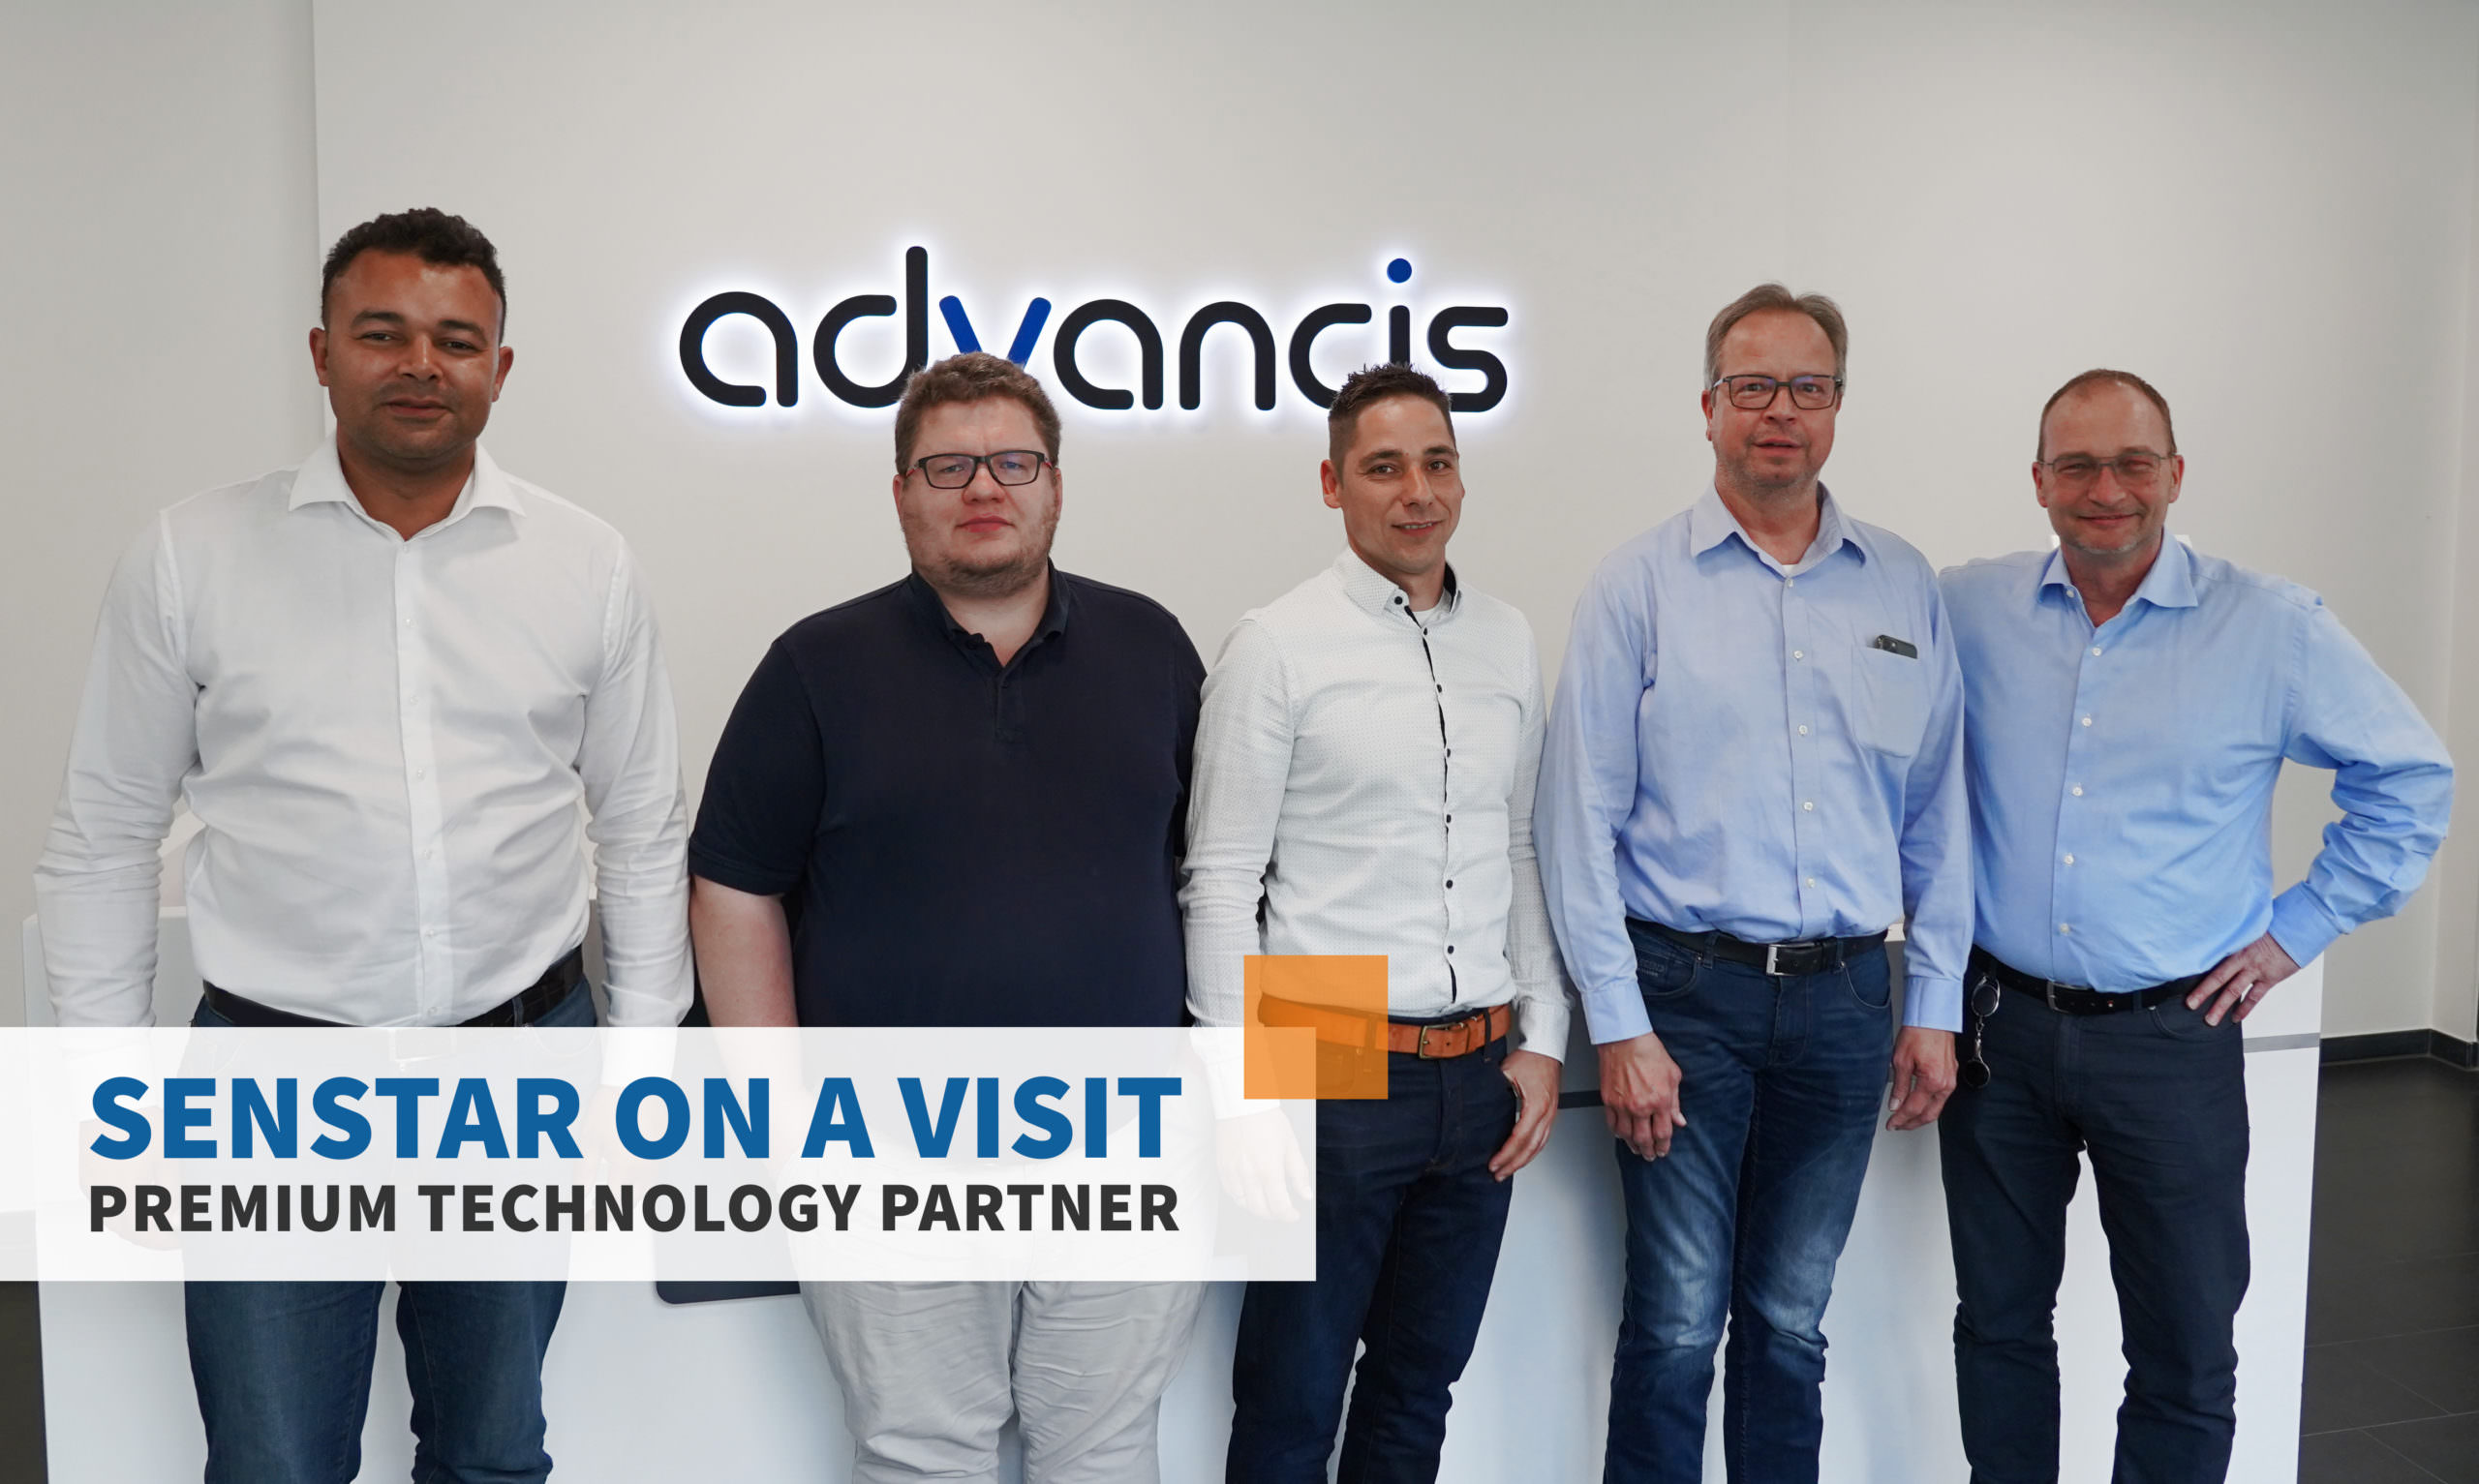  Premium Technology Partner Senstar visits Advancis in Langen